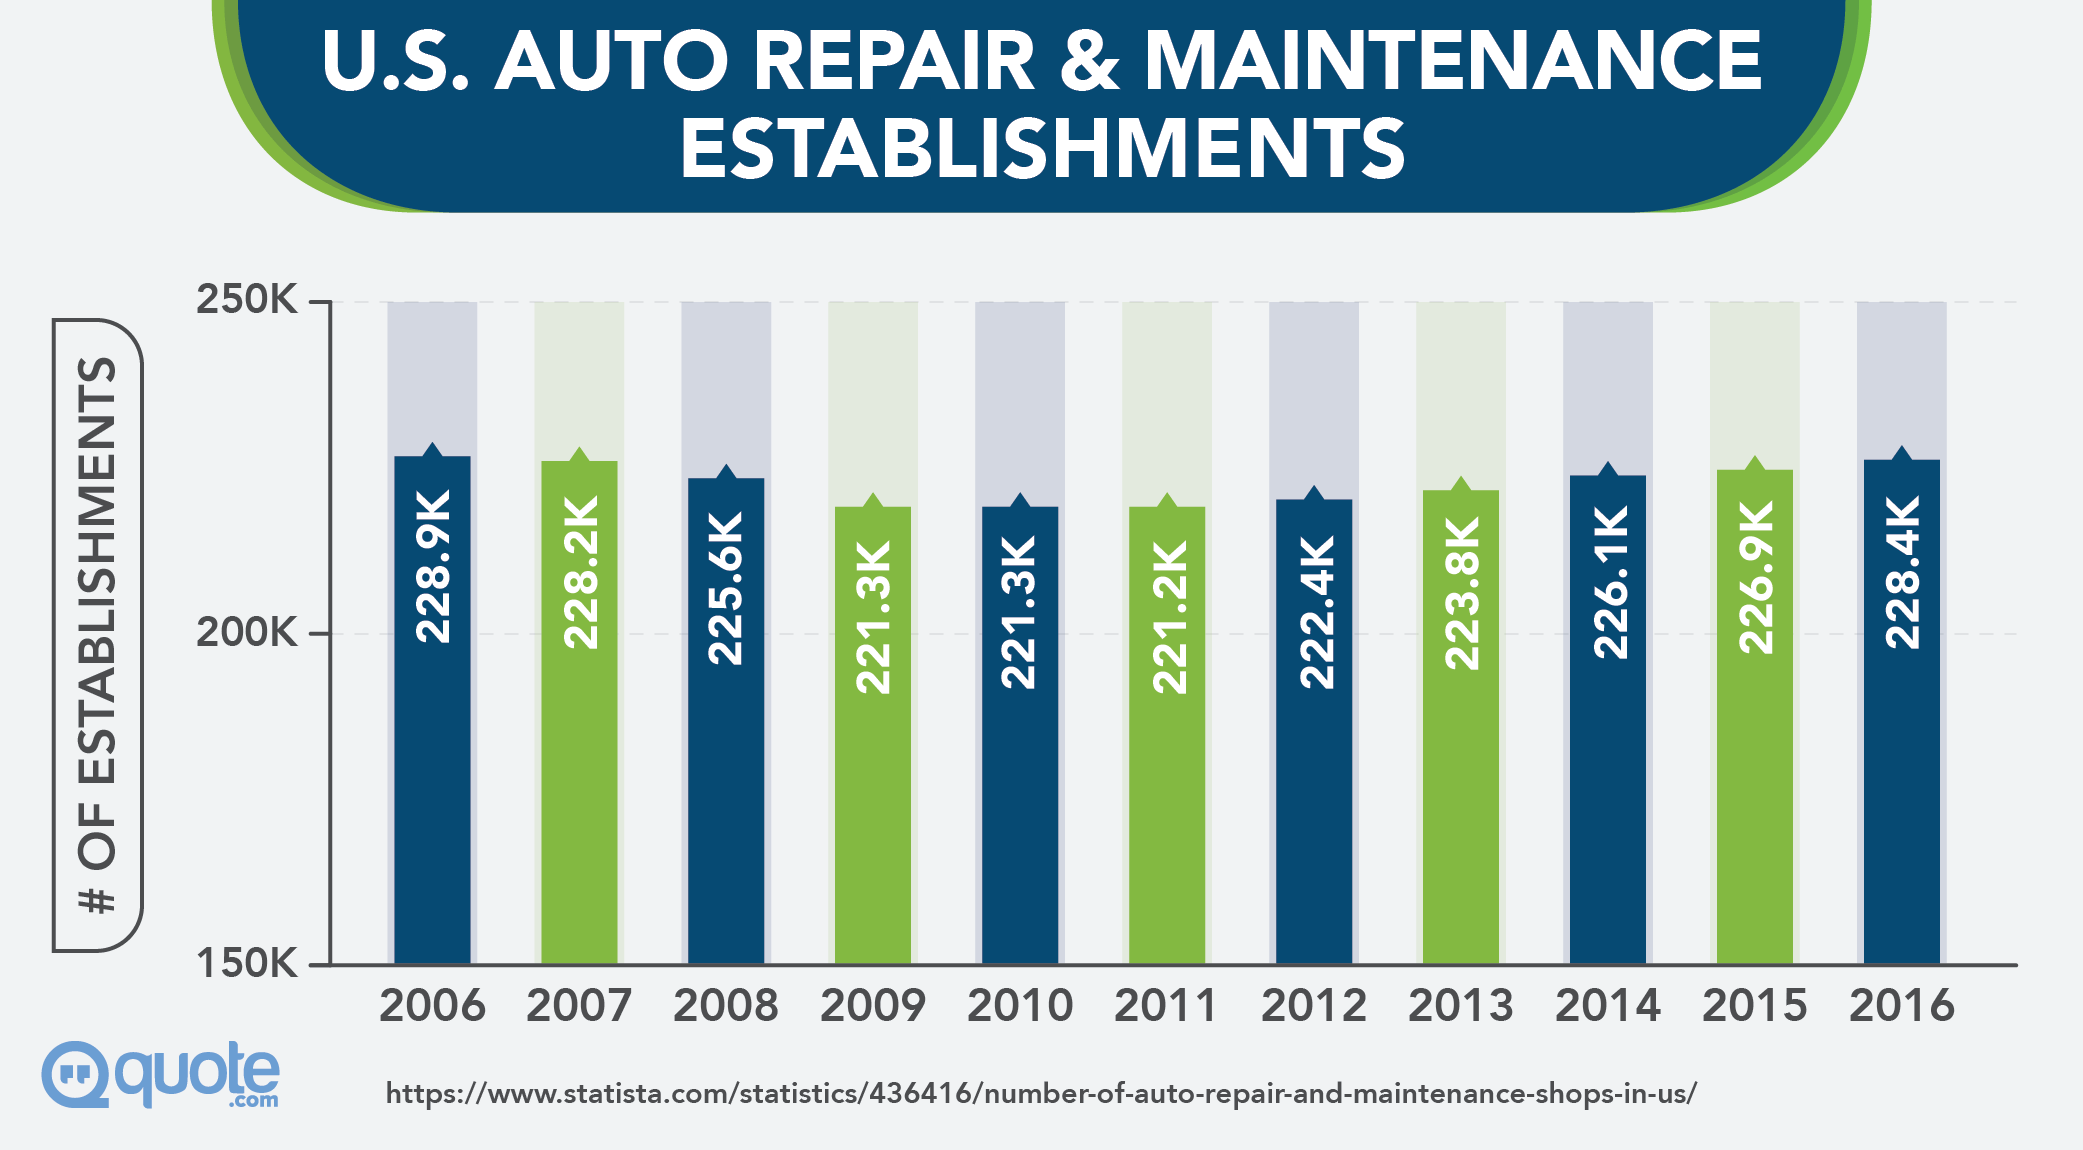 U.S. Auto Repair & Maintenance Establishments from 2006-2016